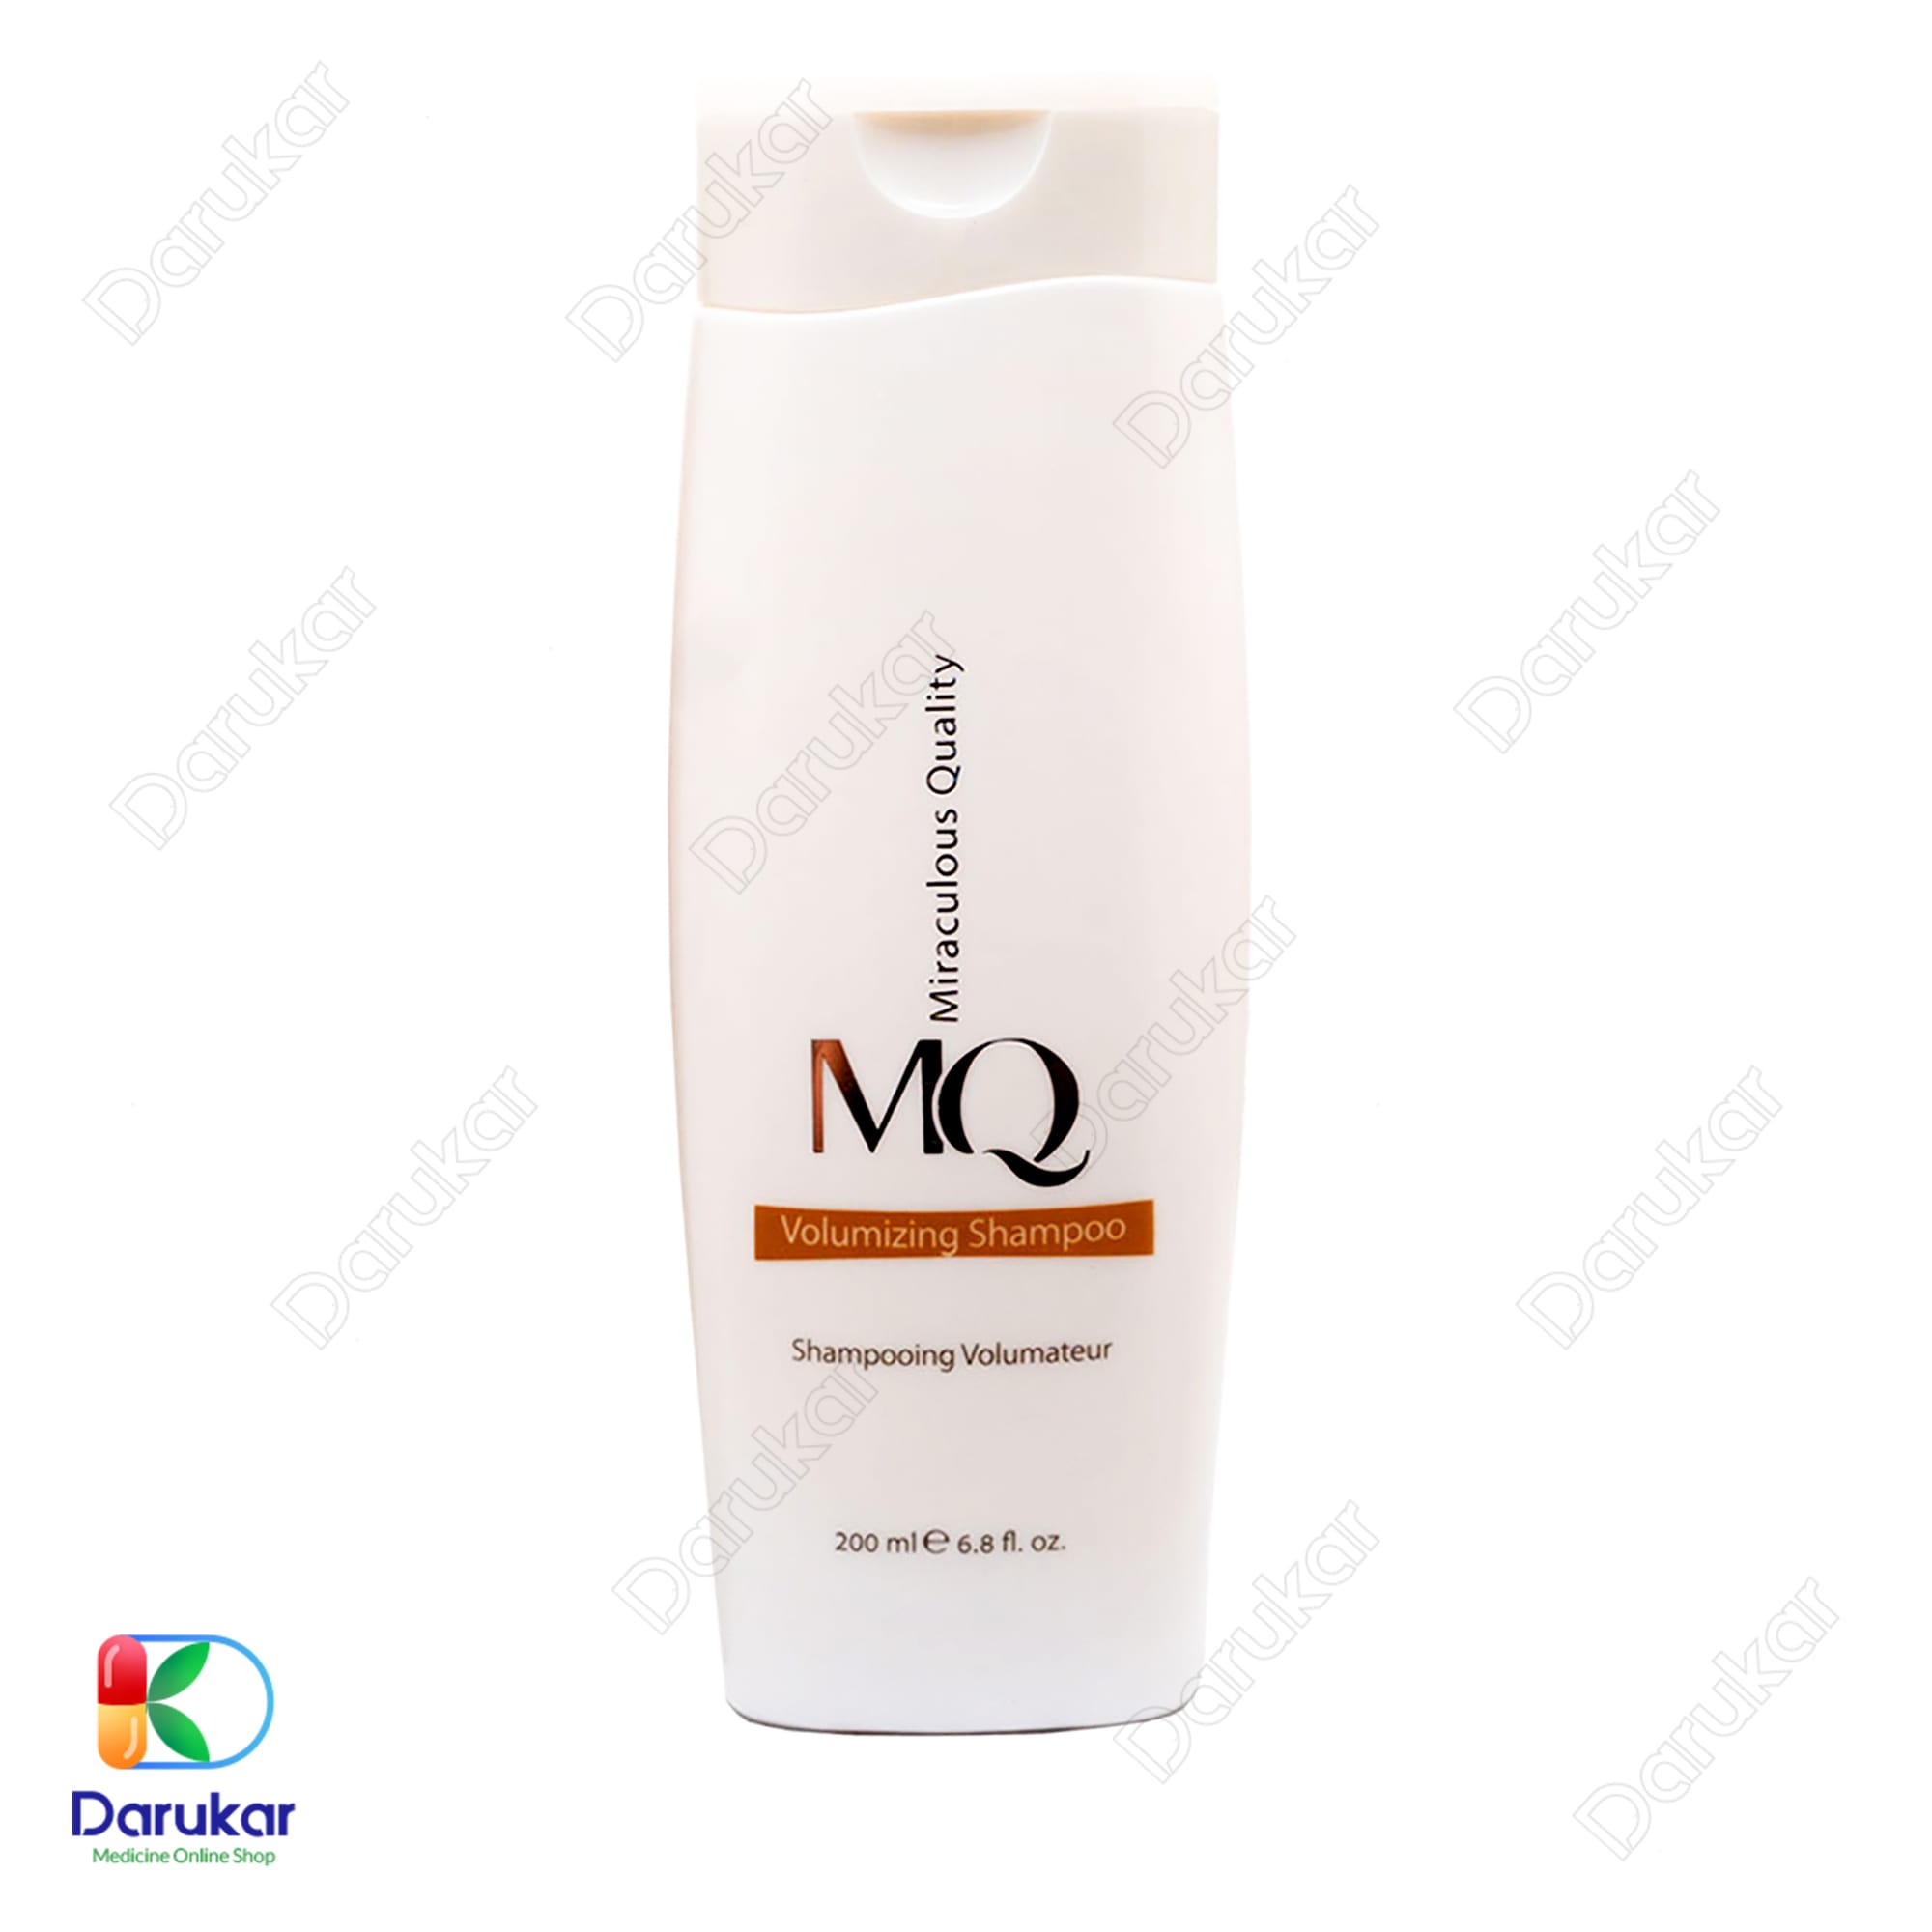 MQ Volumizing Shampoo 200 ml 2